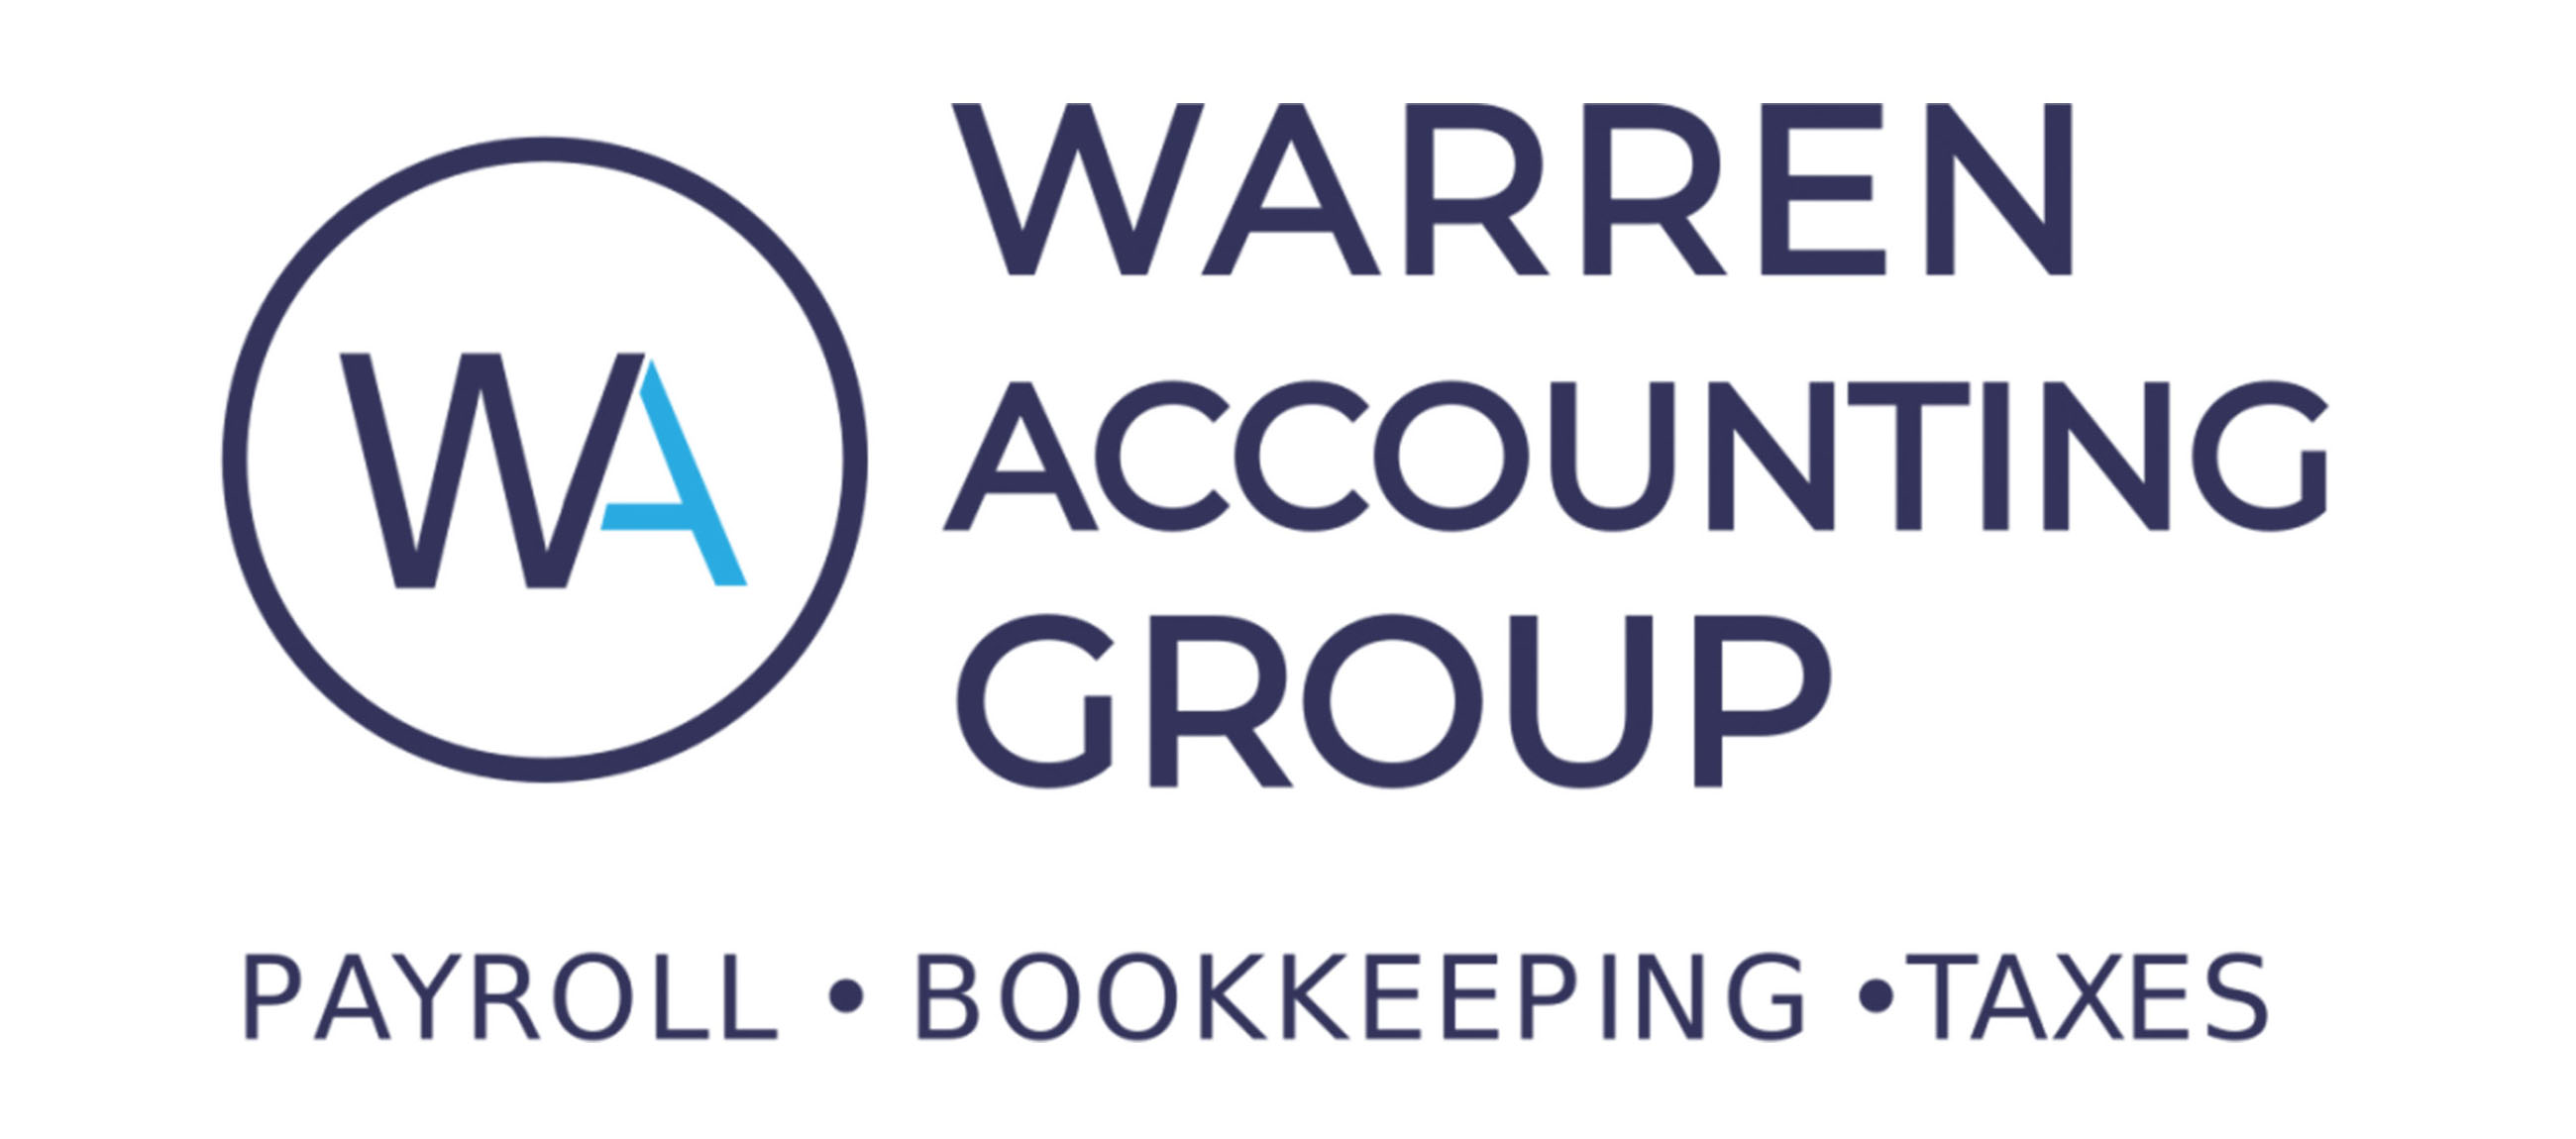 Warren Accounting Group